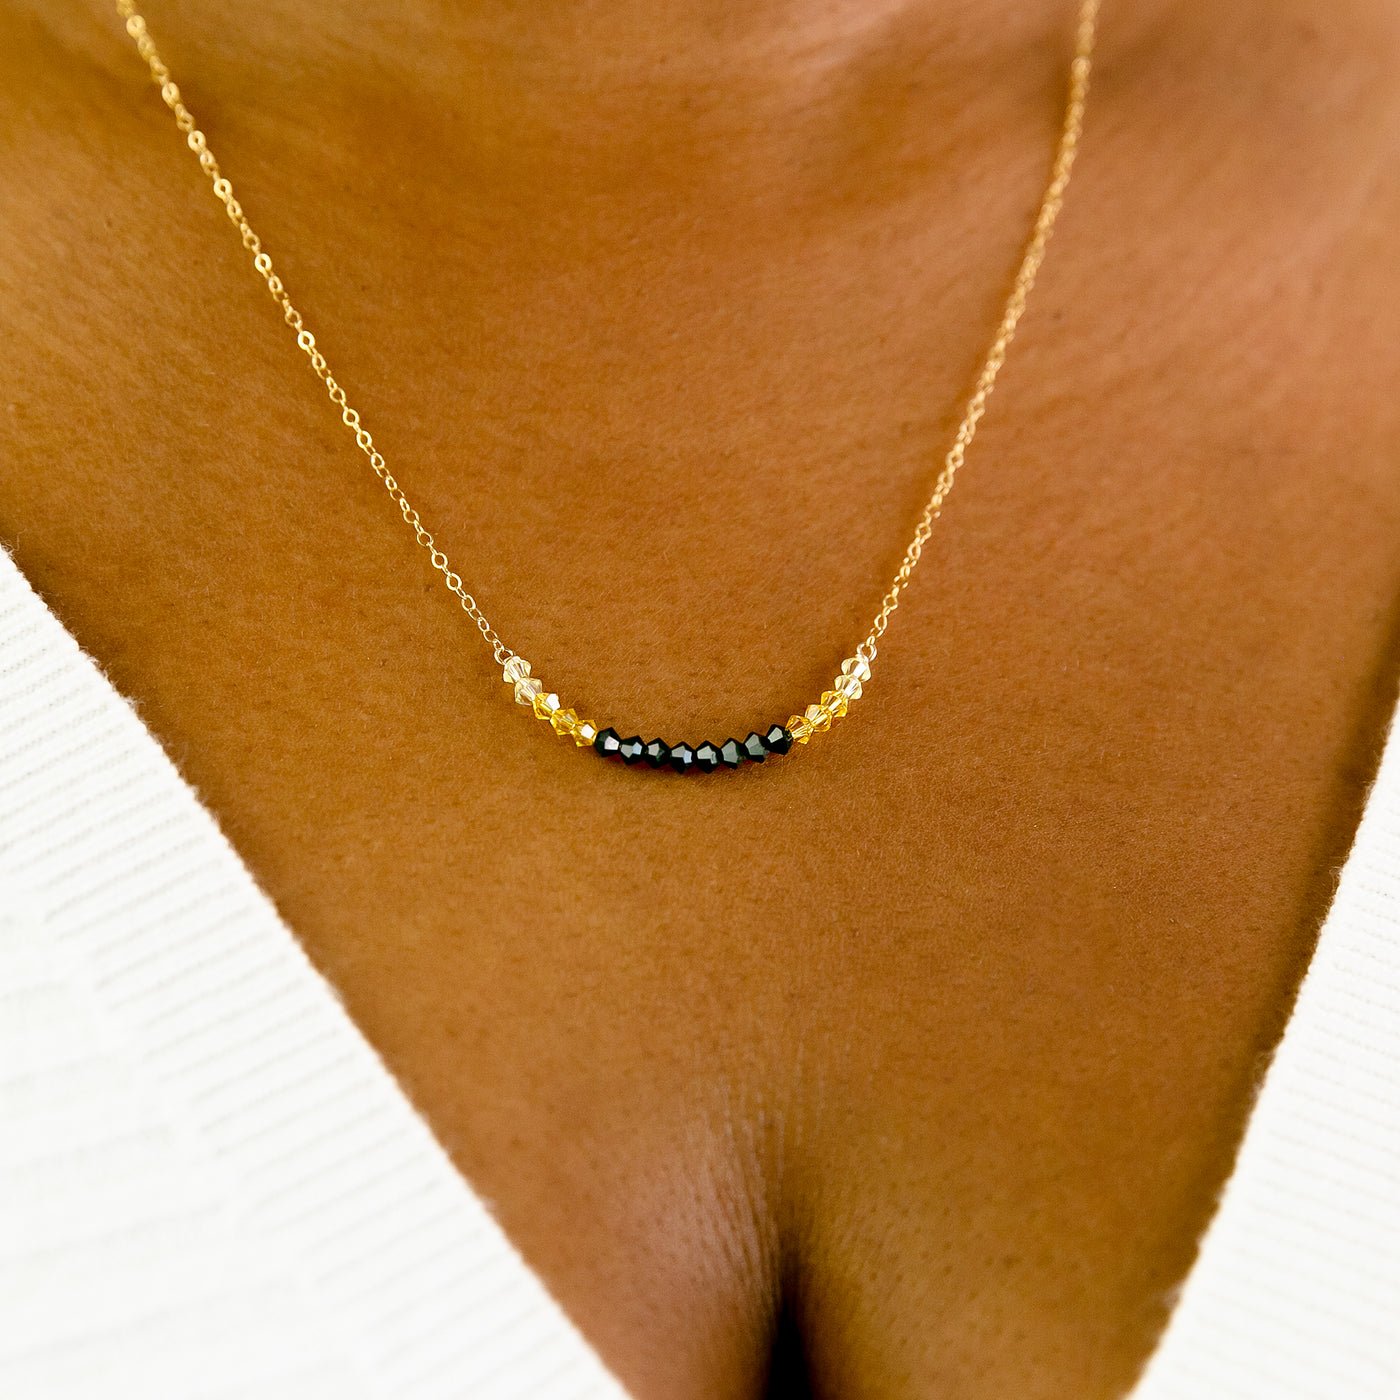 Endometriosis Awareness Necklace - Benefits Endo Black